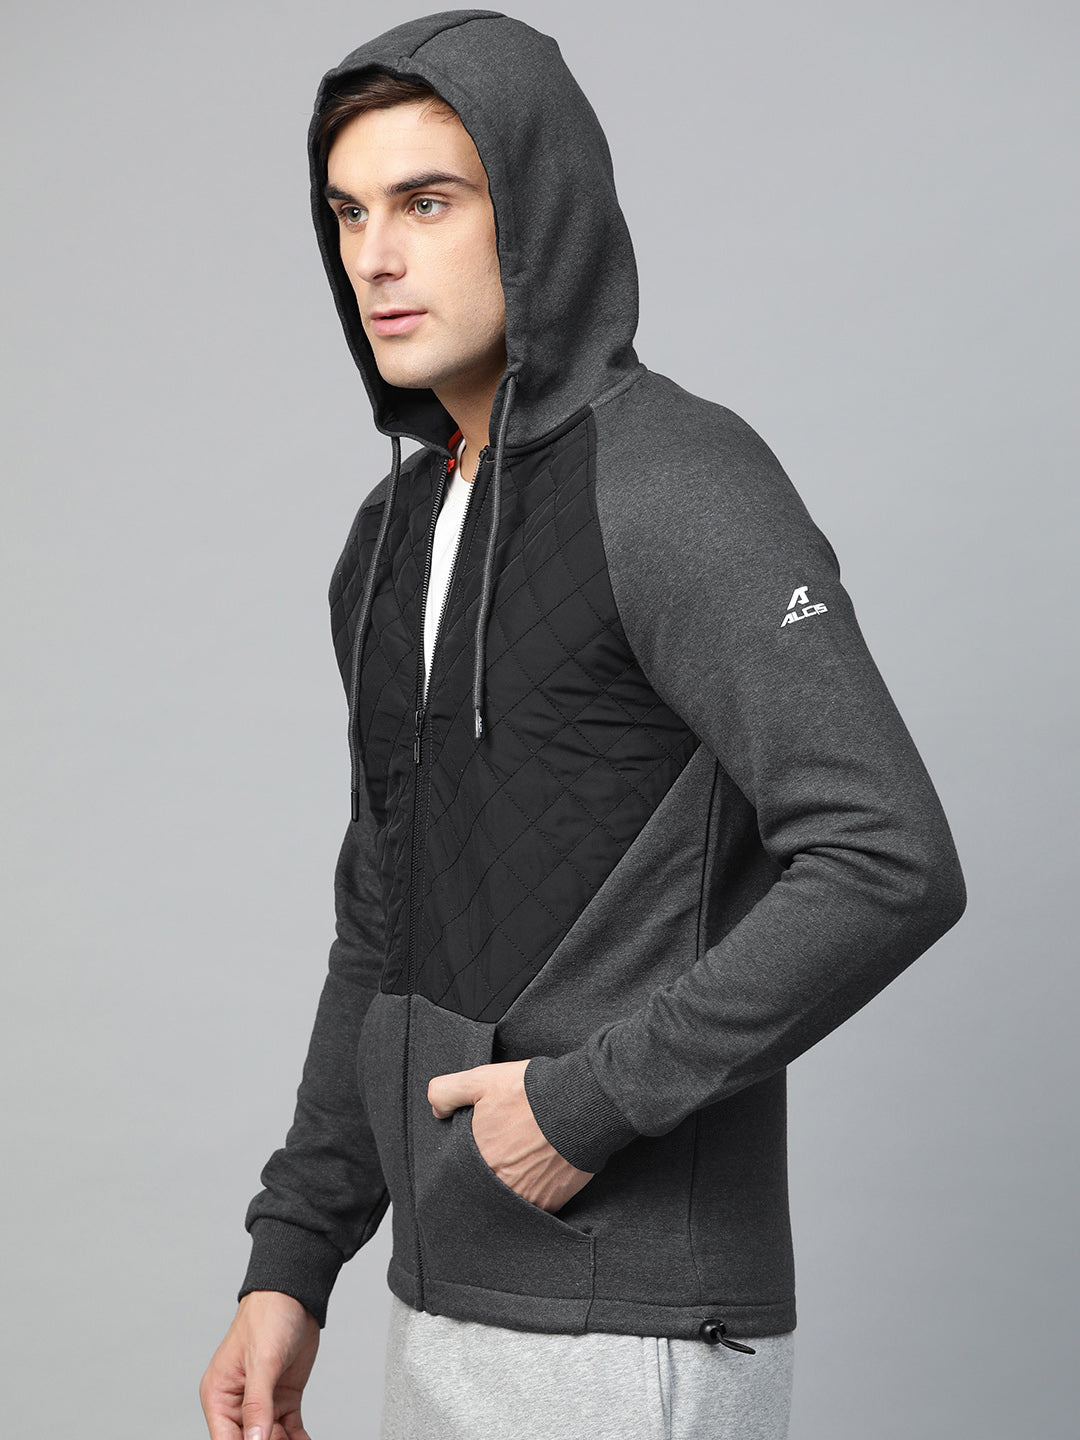 Alcis Men Charcoal Grey  Black Colourblocked Hooded Sweatshirt